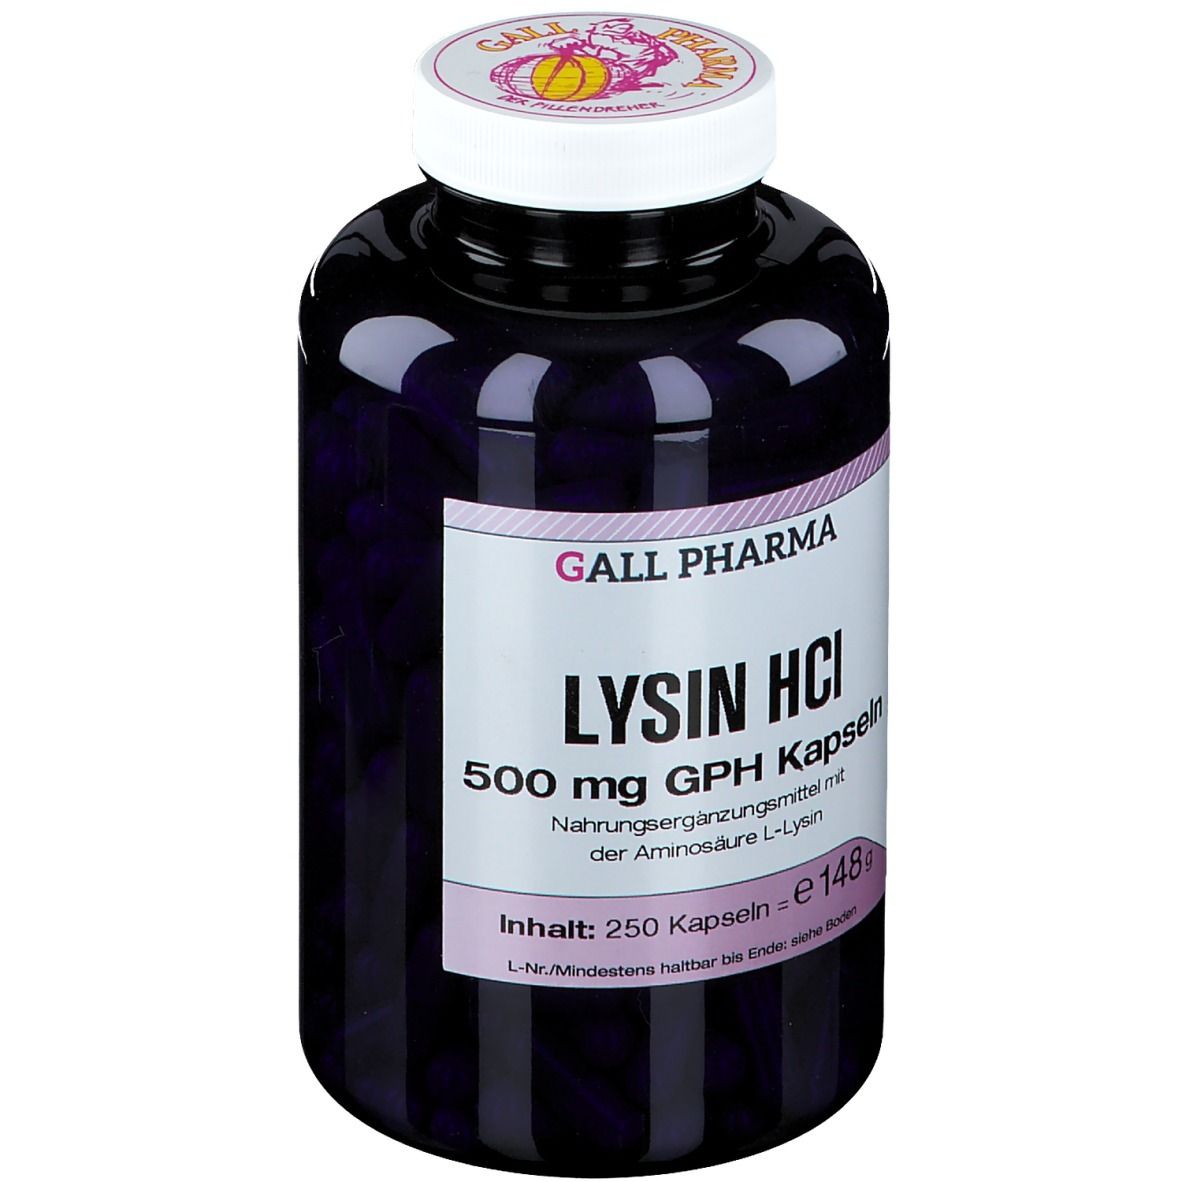 GALL PHARMA Lysin HCL 500 mg